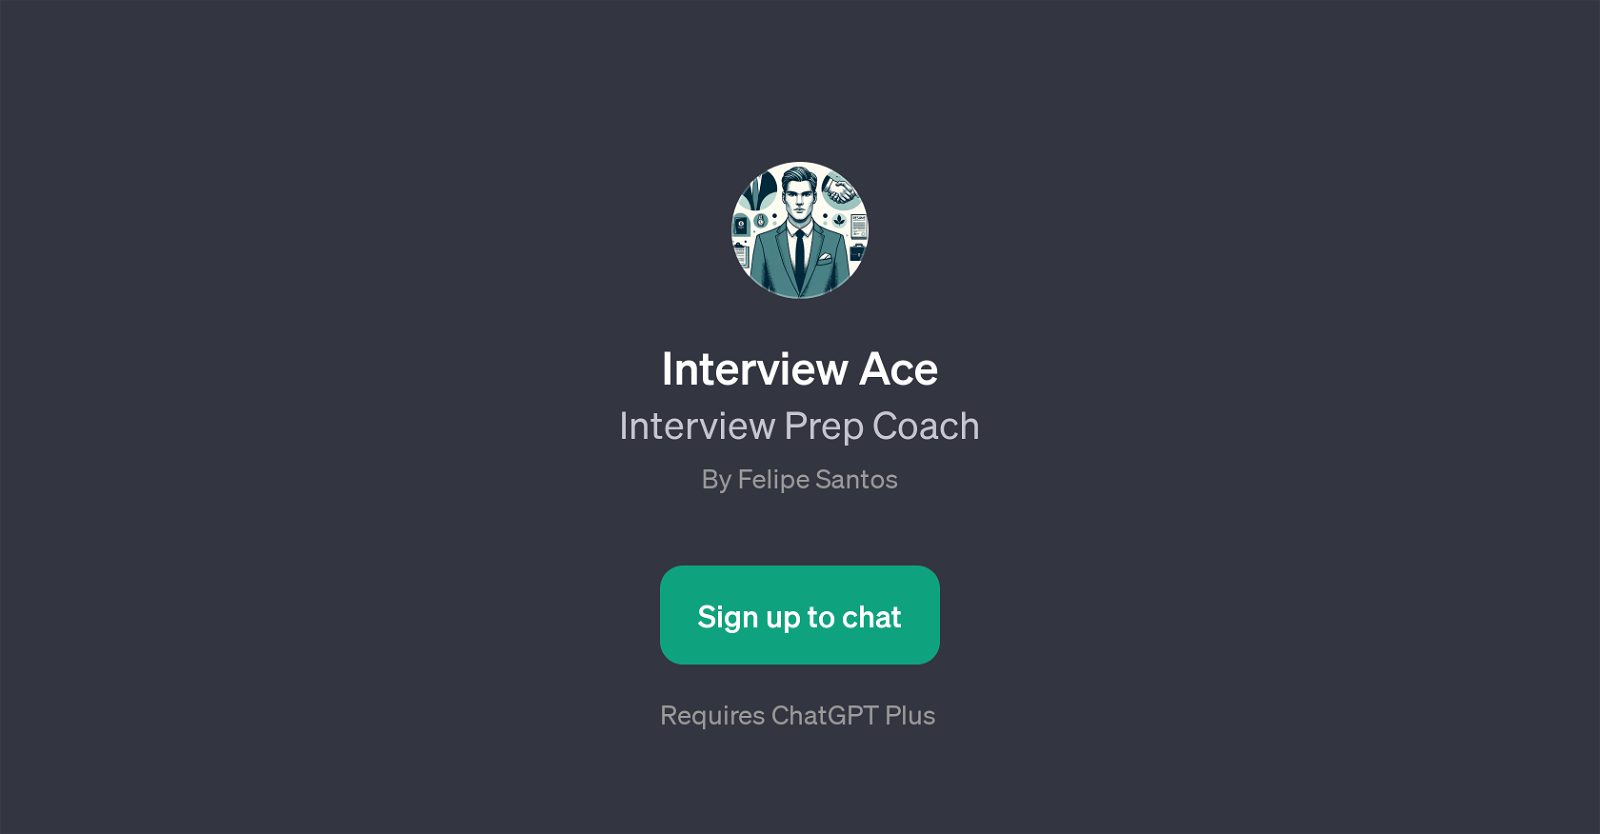 Interview Ace website